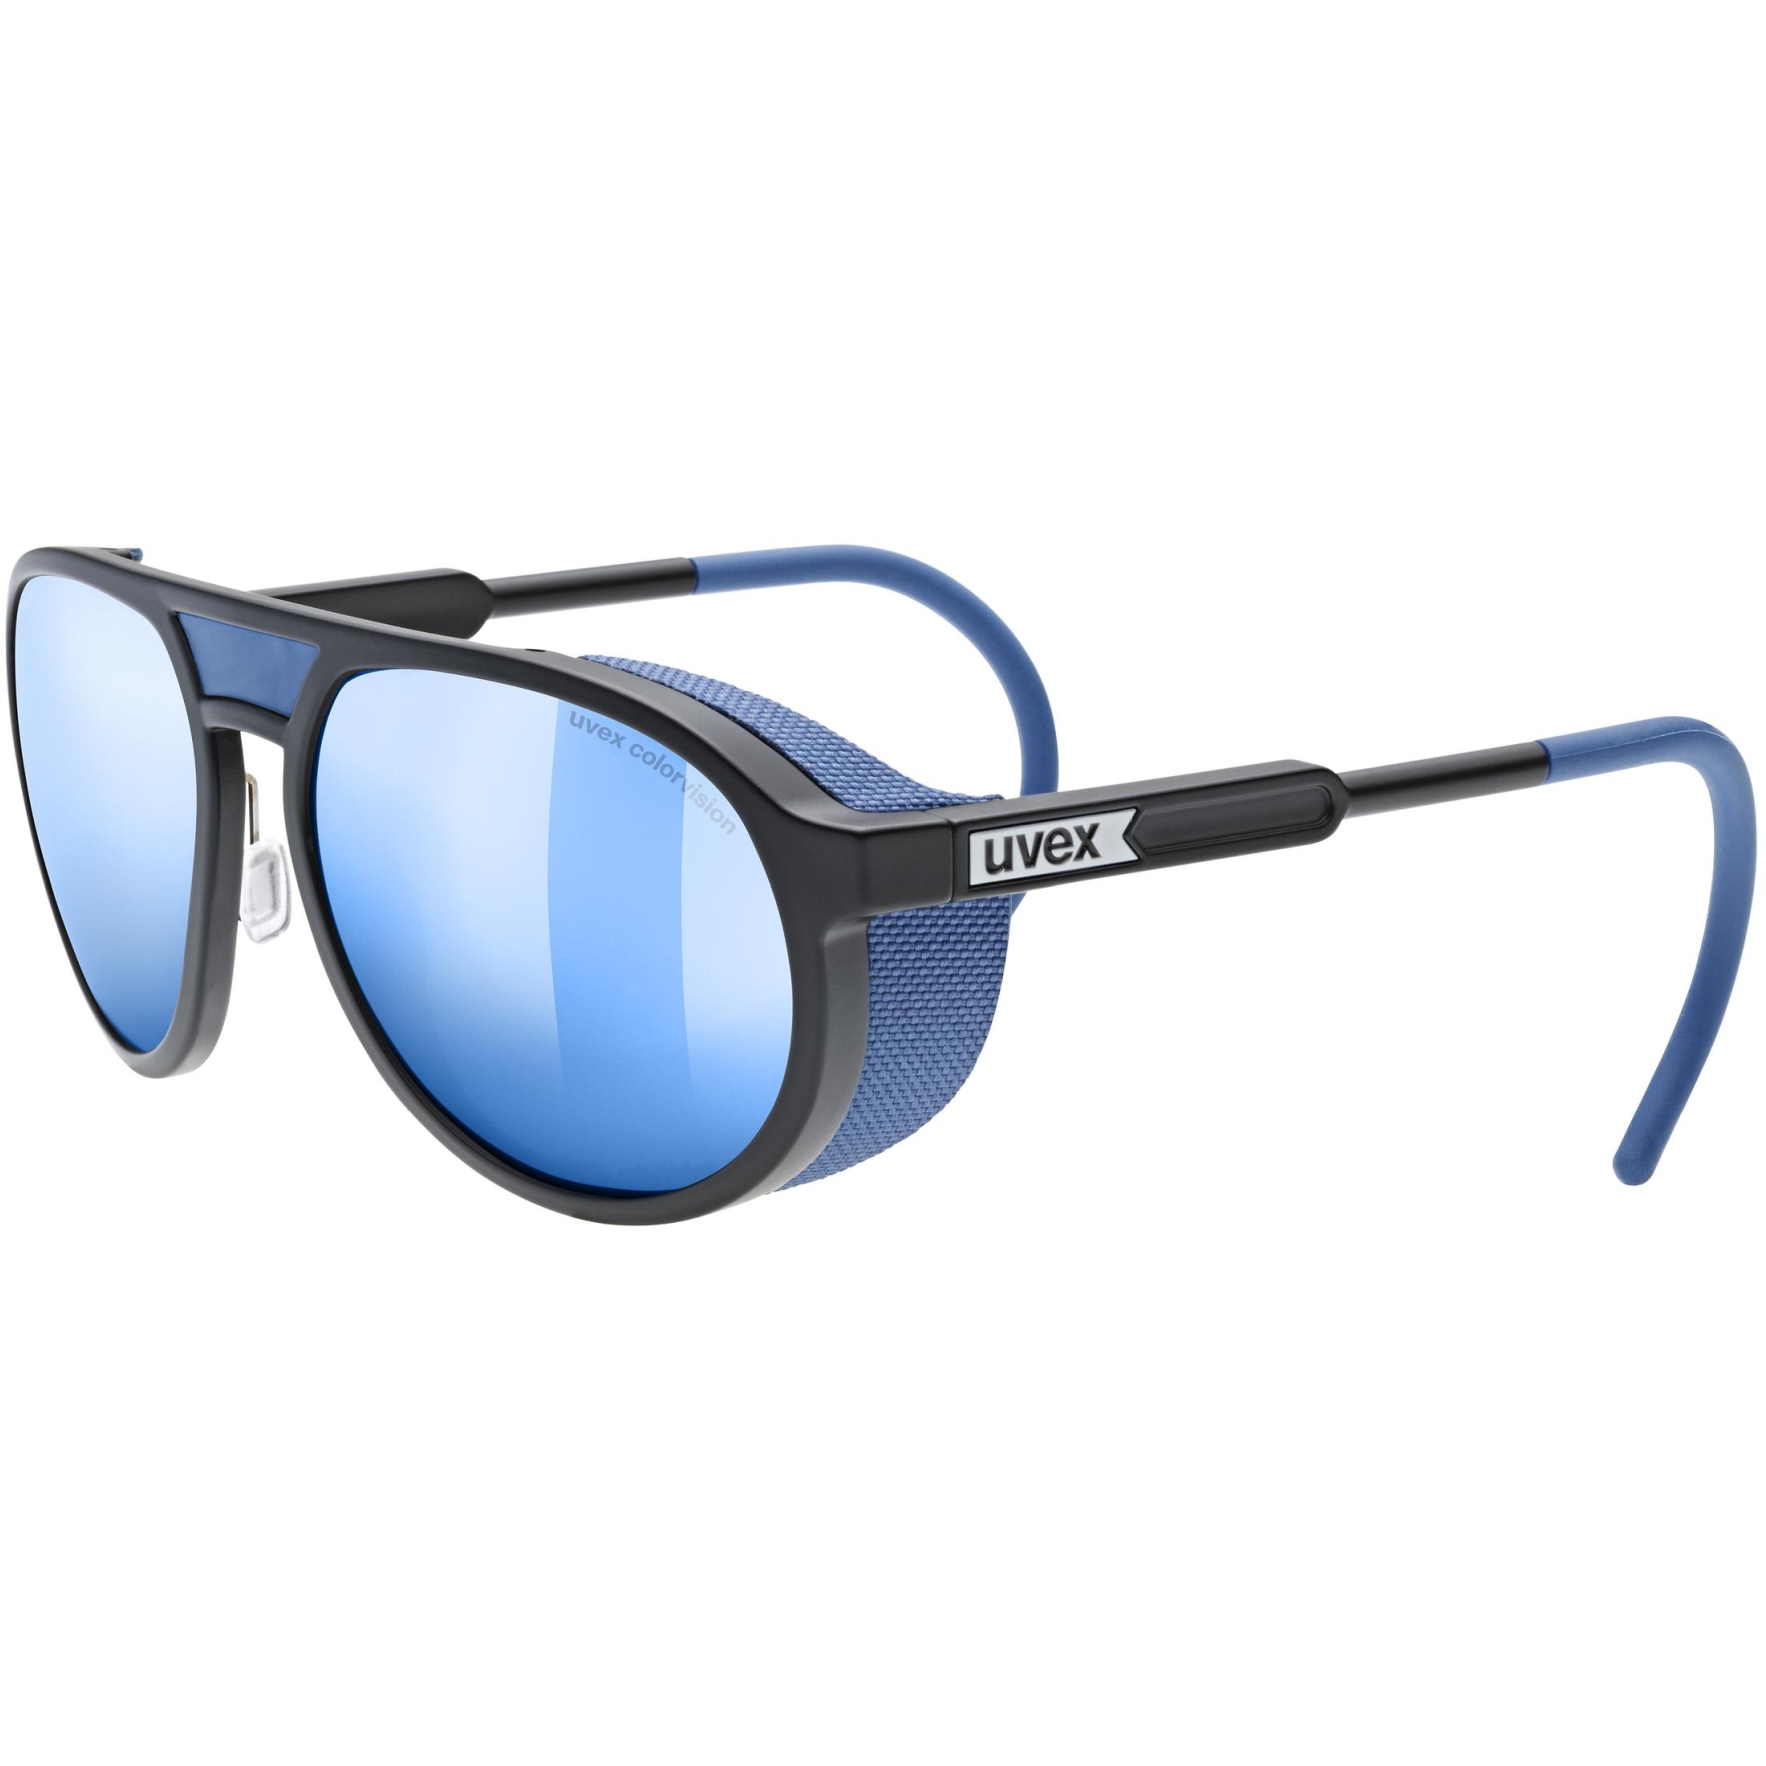 Produktbild von Uvex mtn classic CV Brille - black matt/colorvision mirror blue